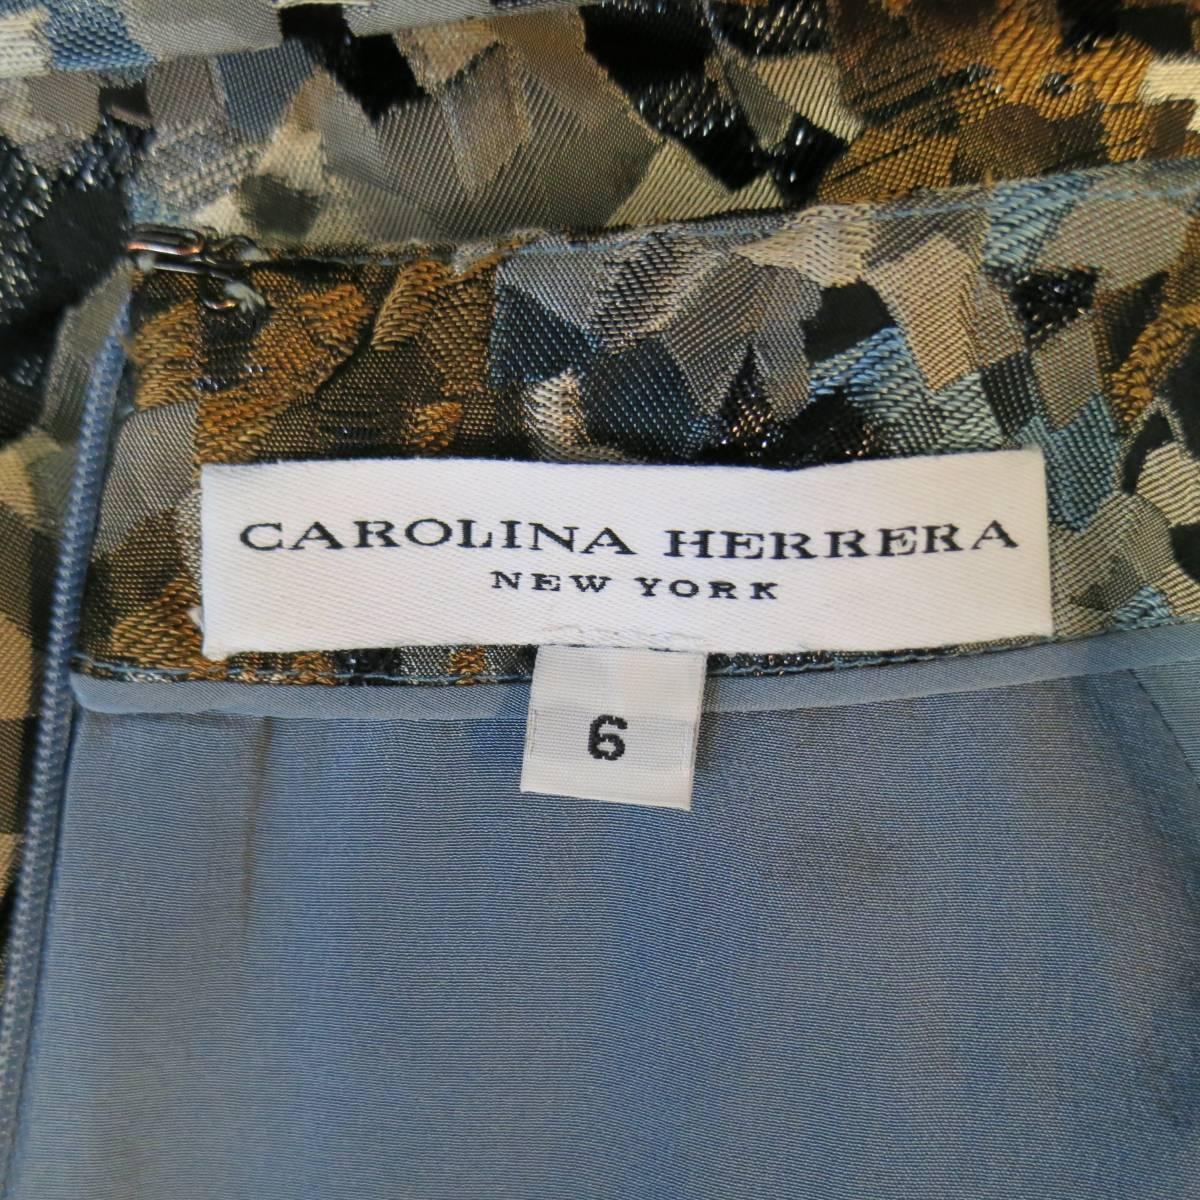 CAROLINA HERRERA 6 Beige Black Blue & Bronze Abstract Brocade Dress 6